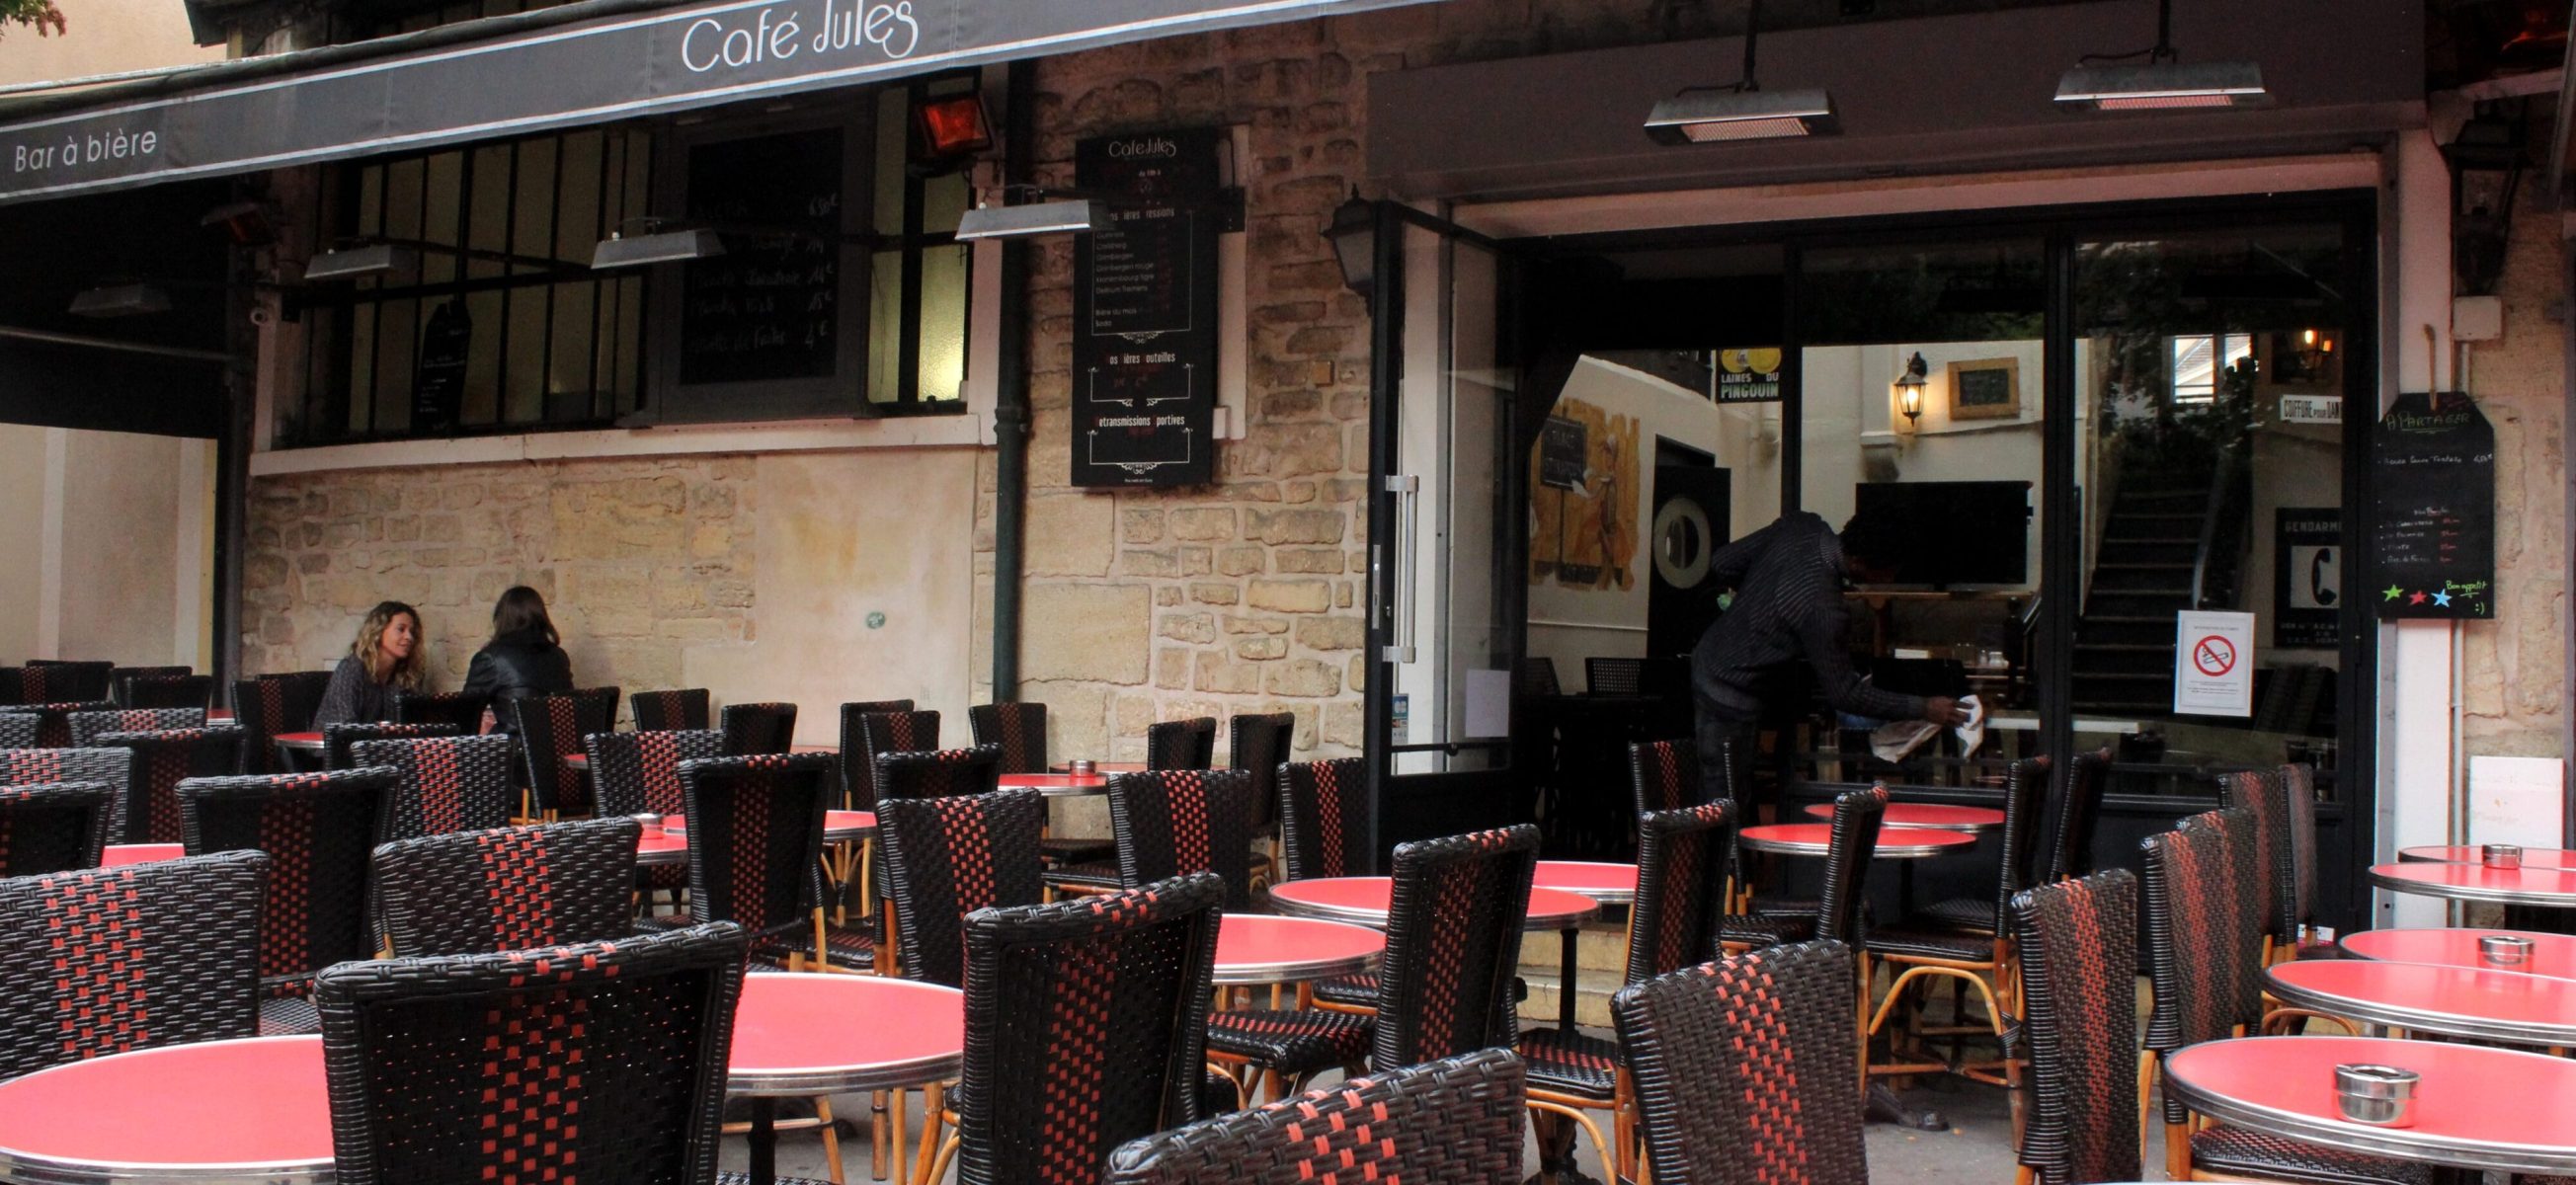 Café Jules, Saint-Germain-en-Laye